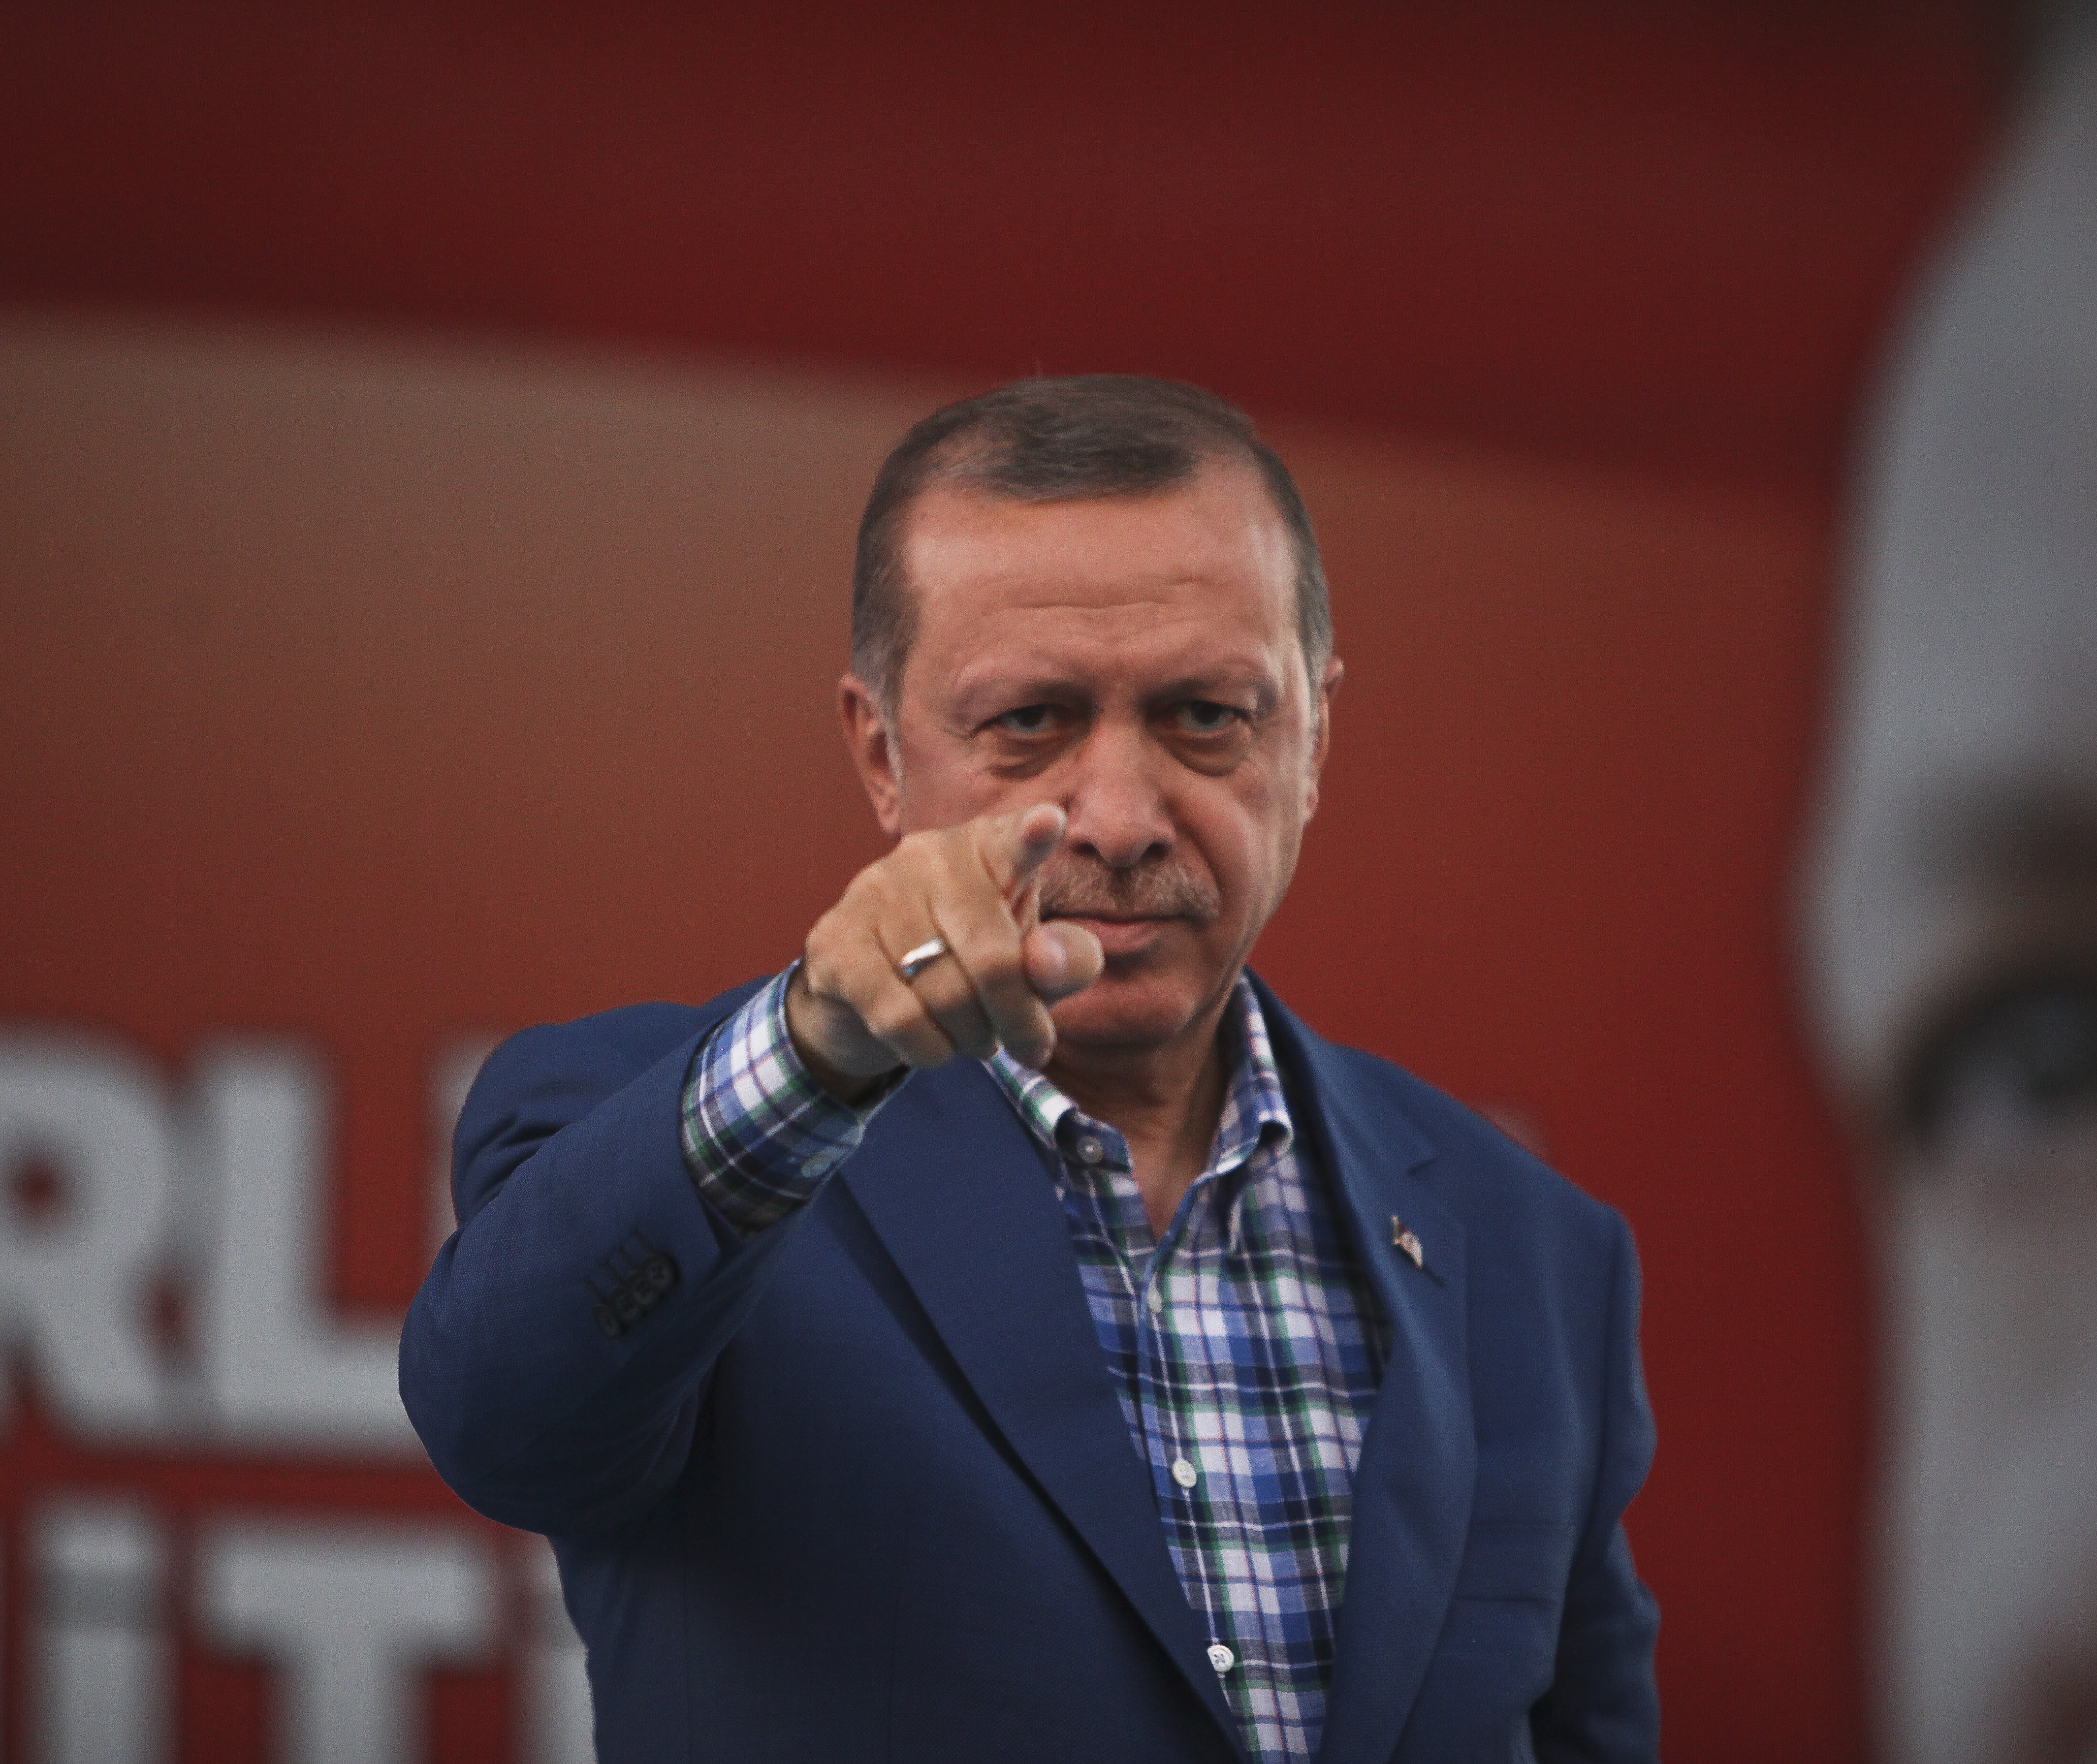 German dentist gets 16-month suspended sentence for Erdoğan insult, other charges 1